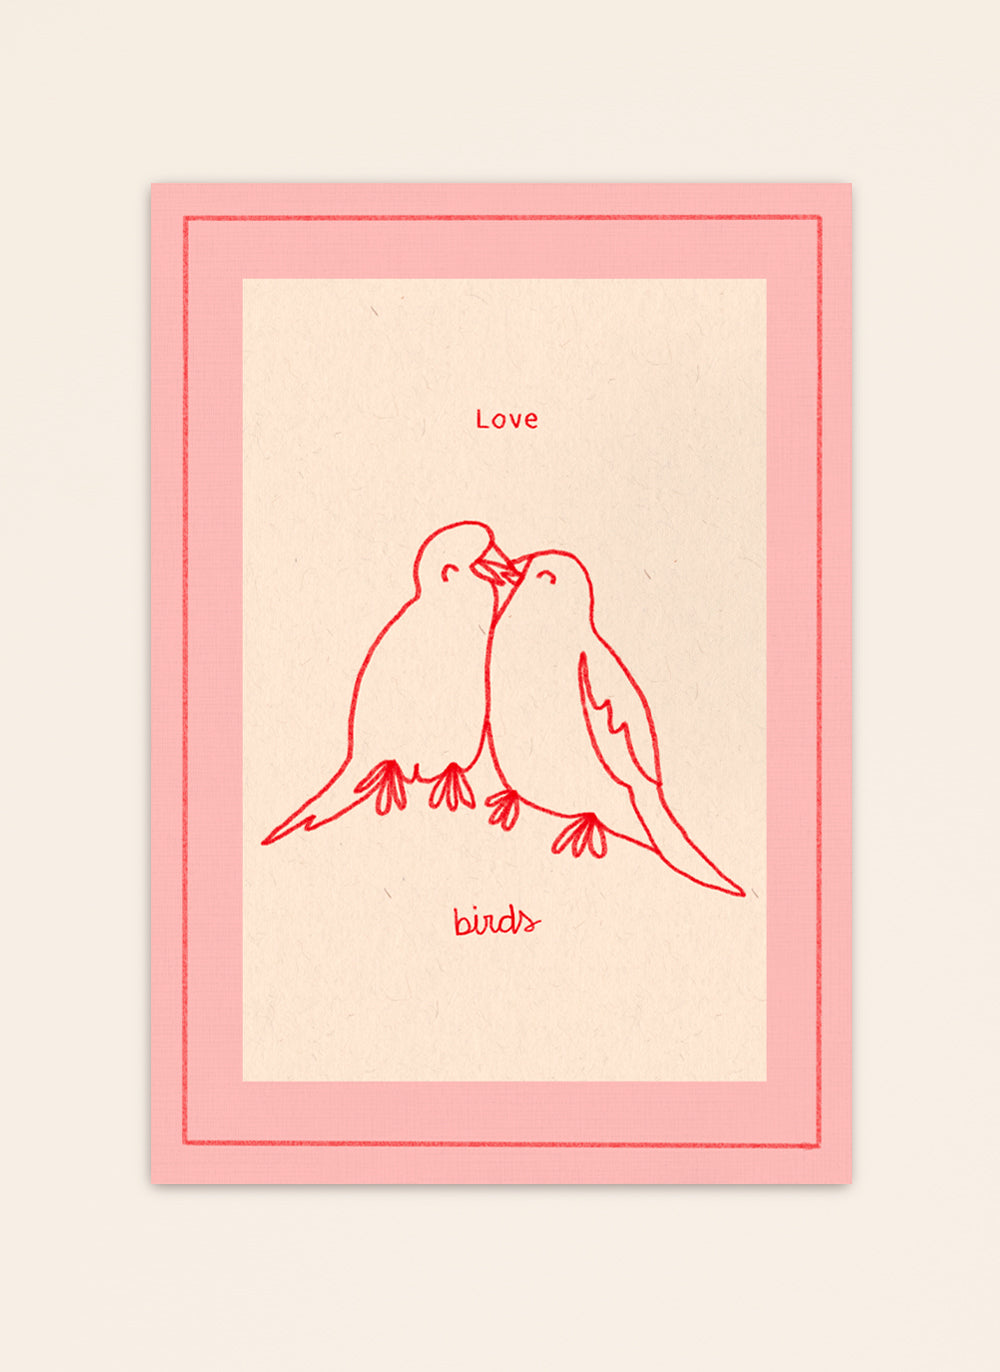 Pájaritos de amor